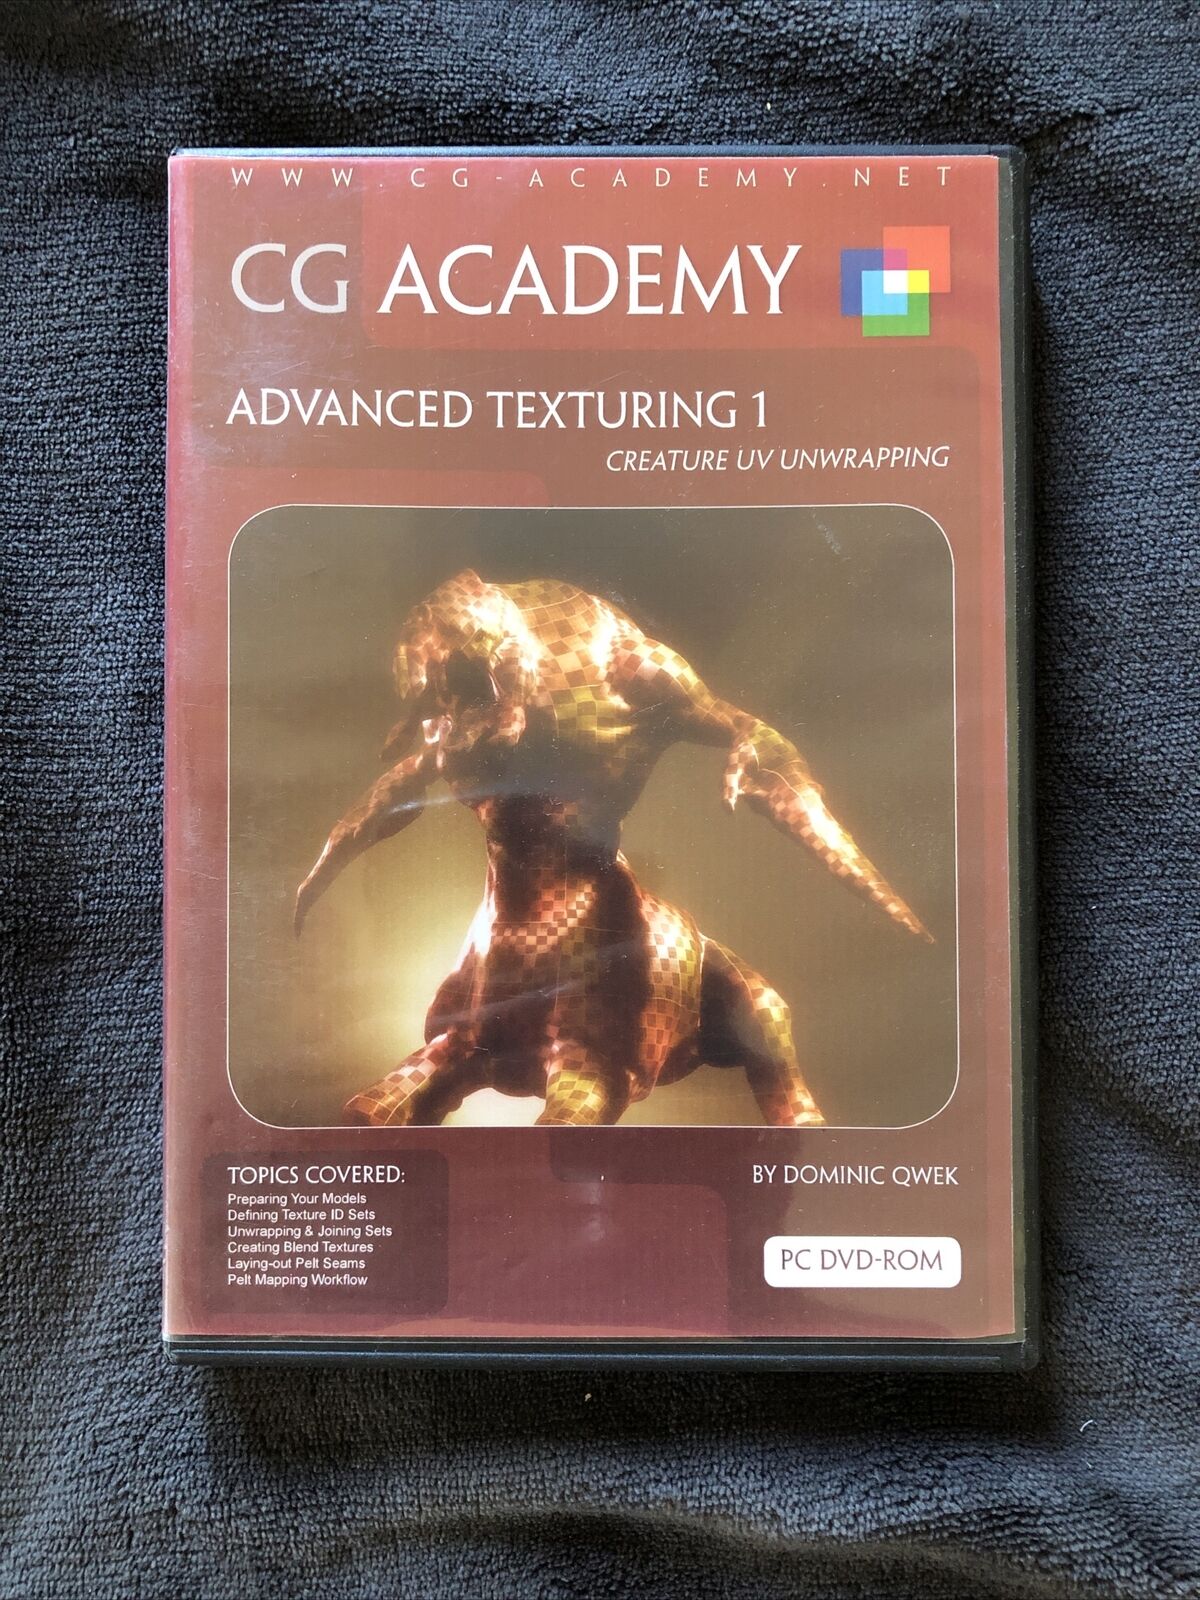 CG Academy - Advanced Texturing 1 PC DVD-ROm Dominic Qwek/Creature UV Unwrapping